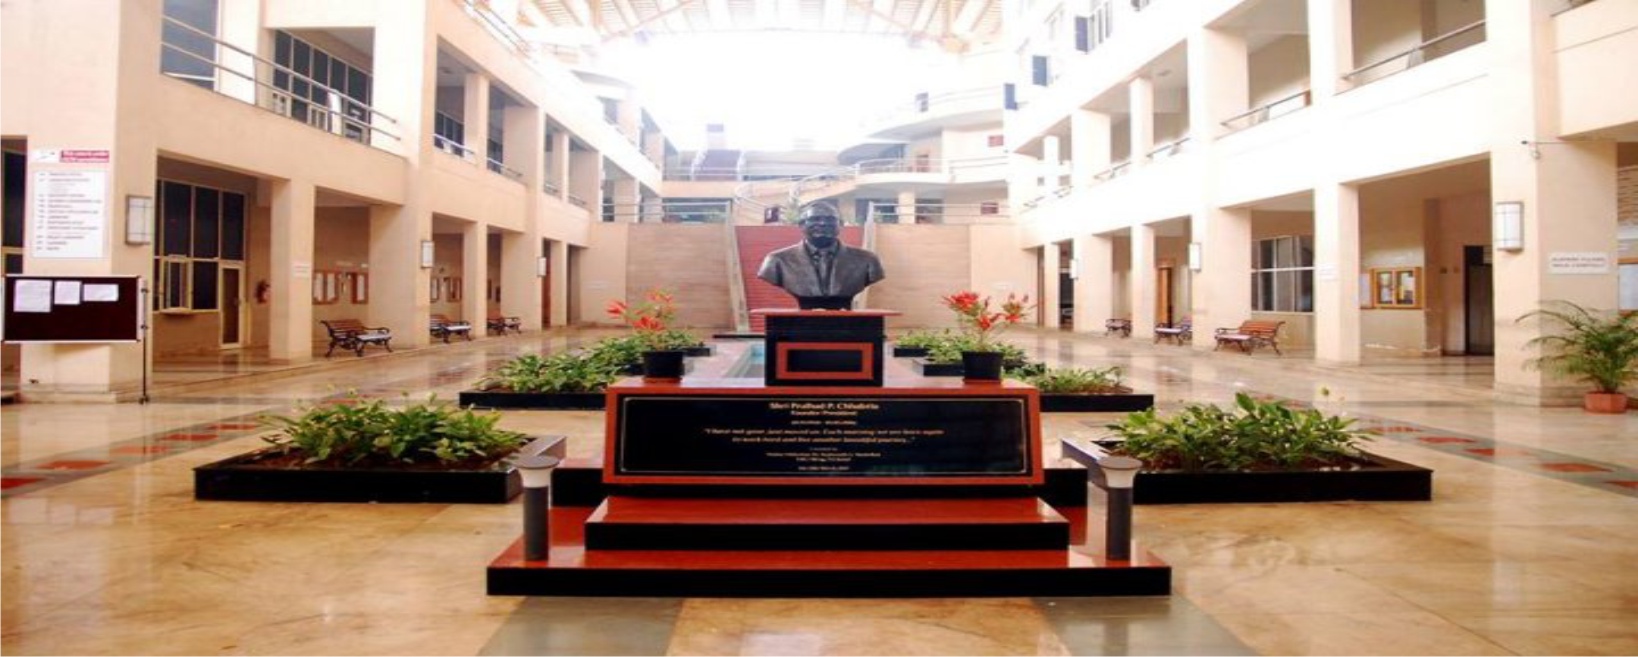 International Institute of Information Technology (IIT), Pune